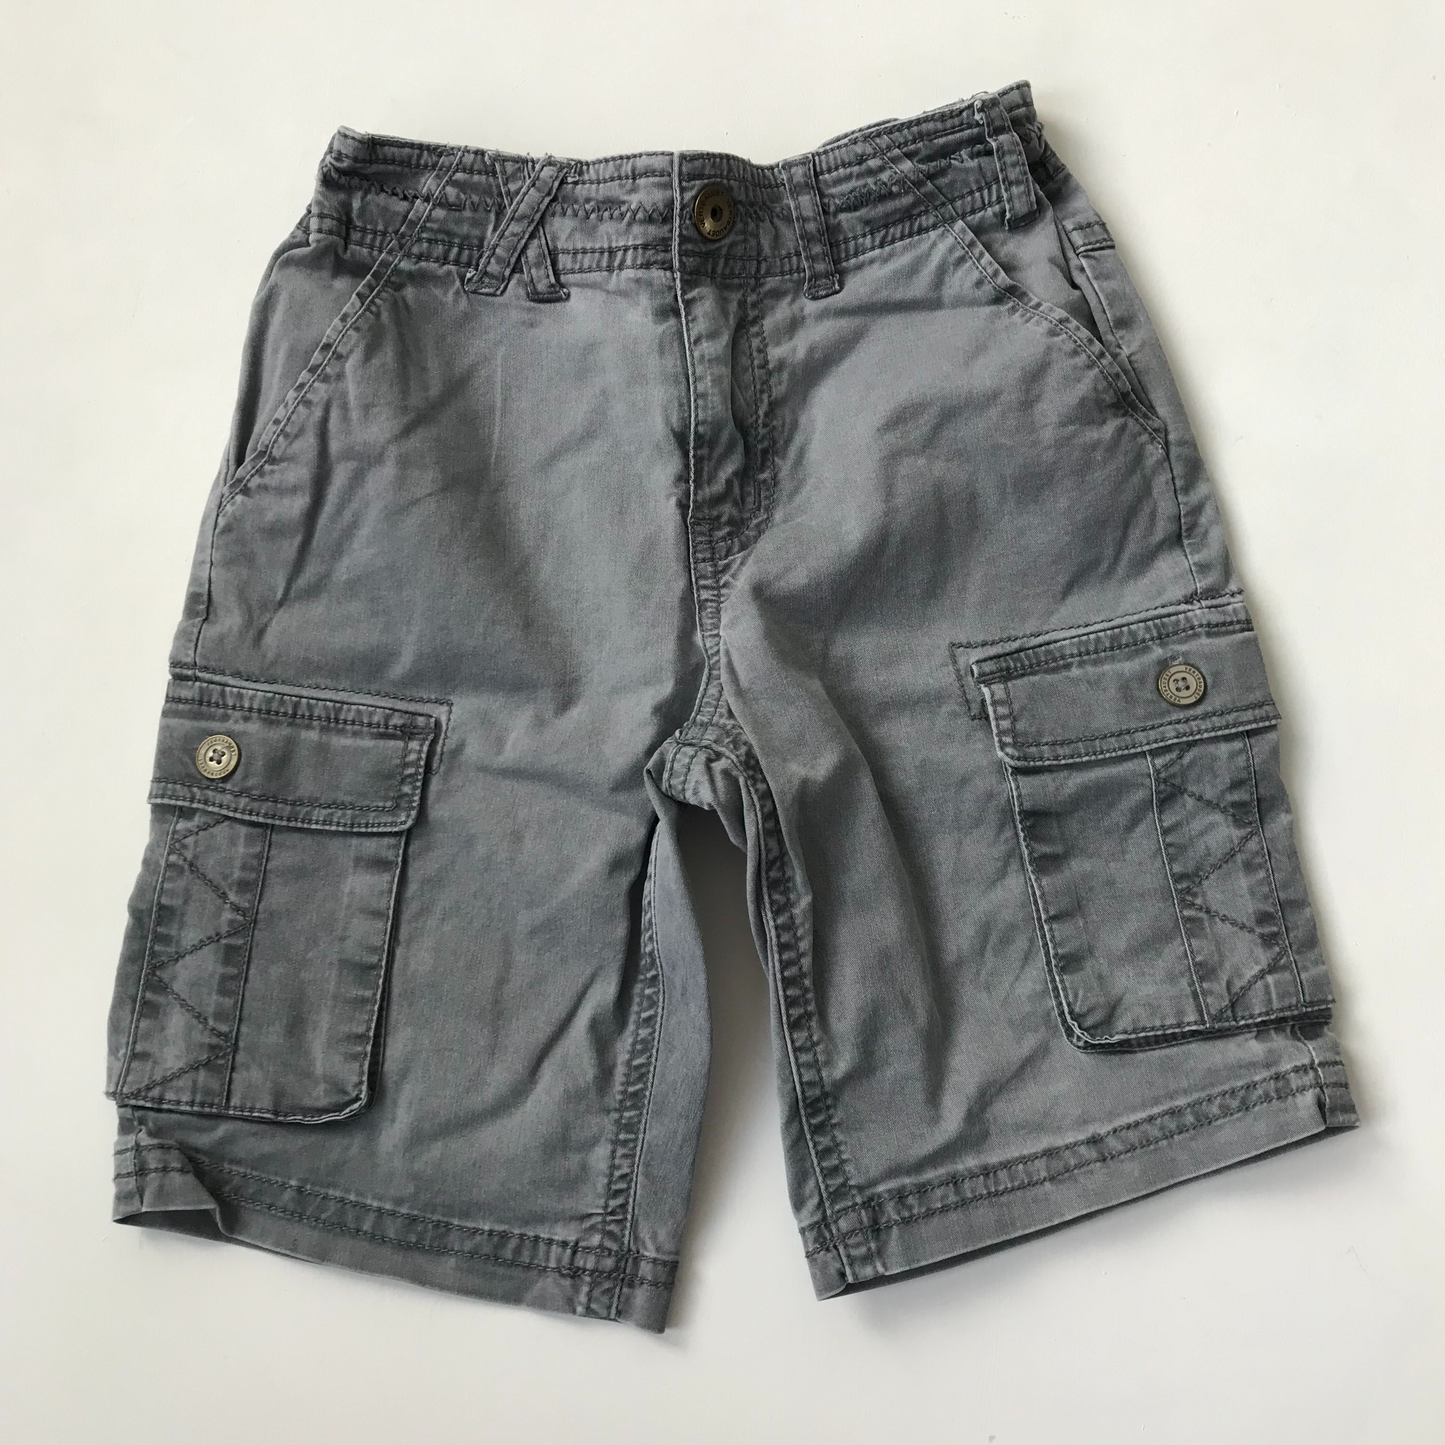 Shorts - Grey Cargo - Age 6